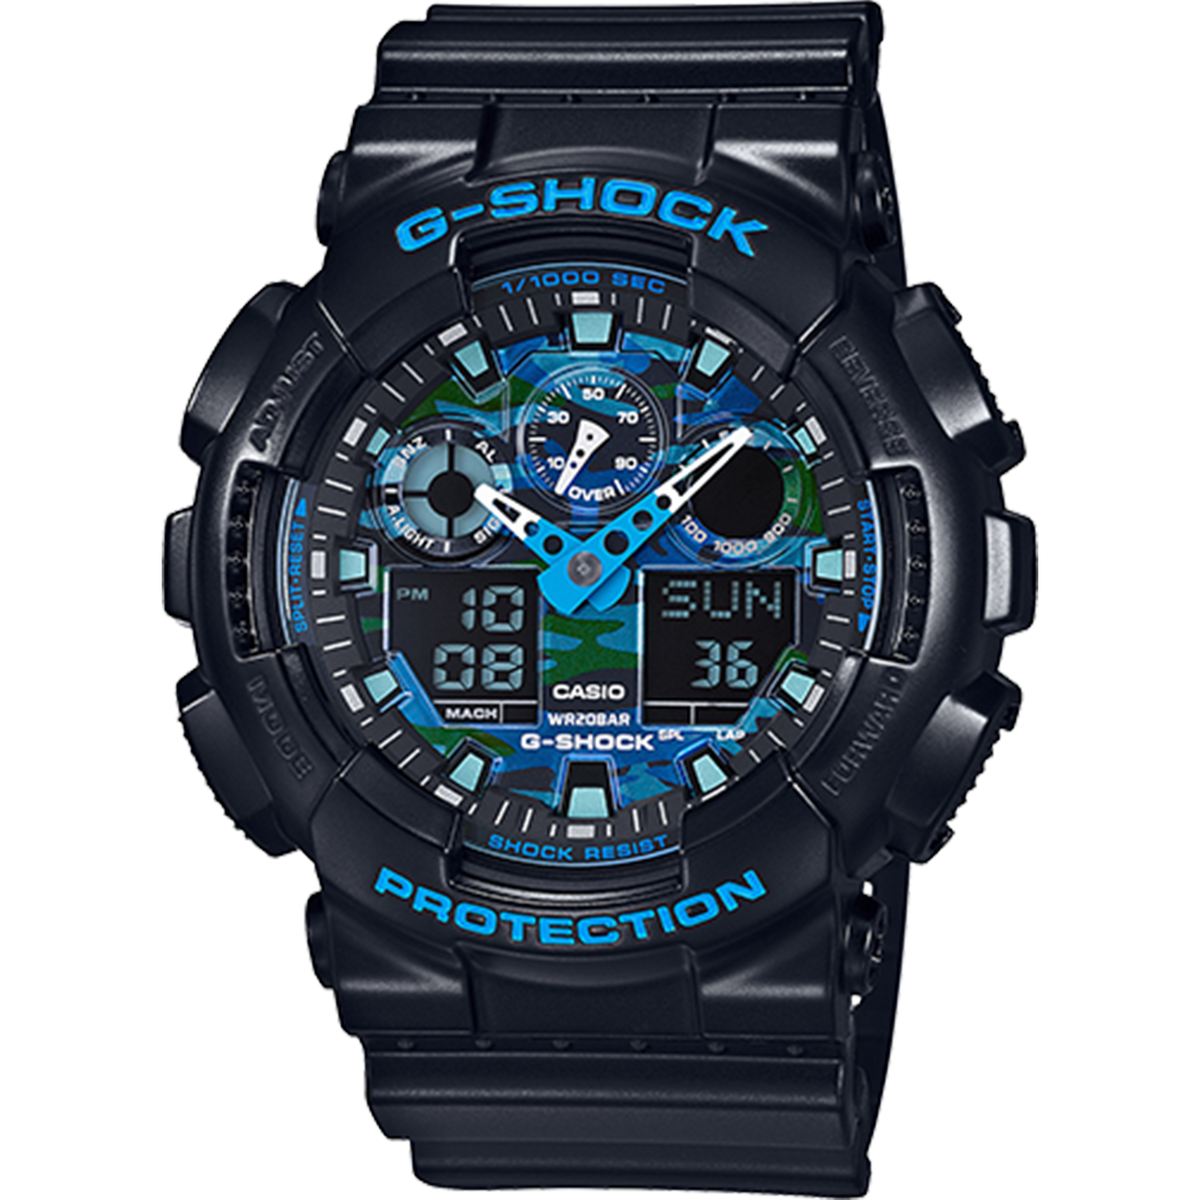 Casio G-Shock - GA100 Series - Black With Blue Camo Dial